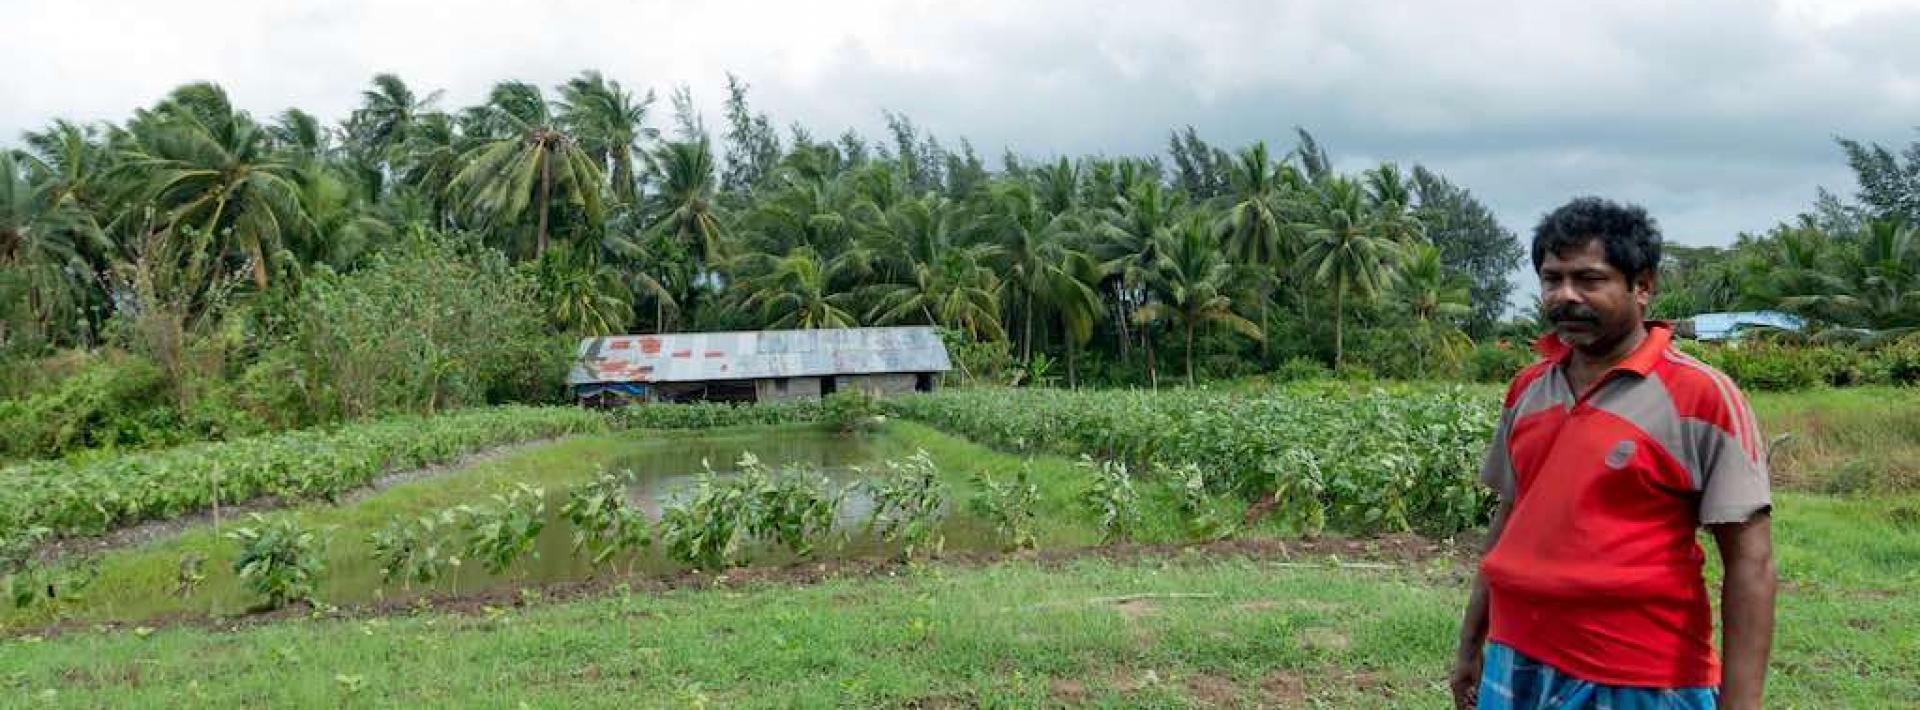 Andaman farmers reshape land for better farming